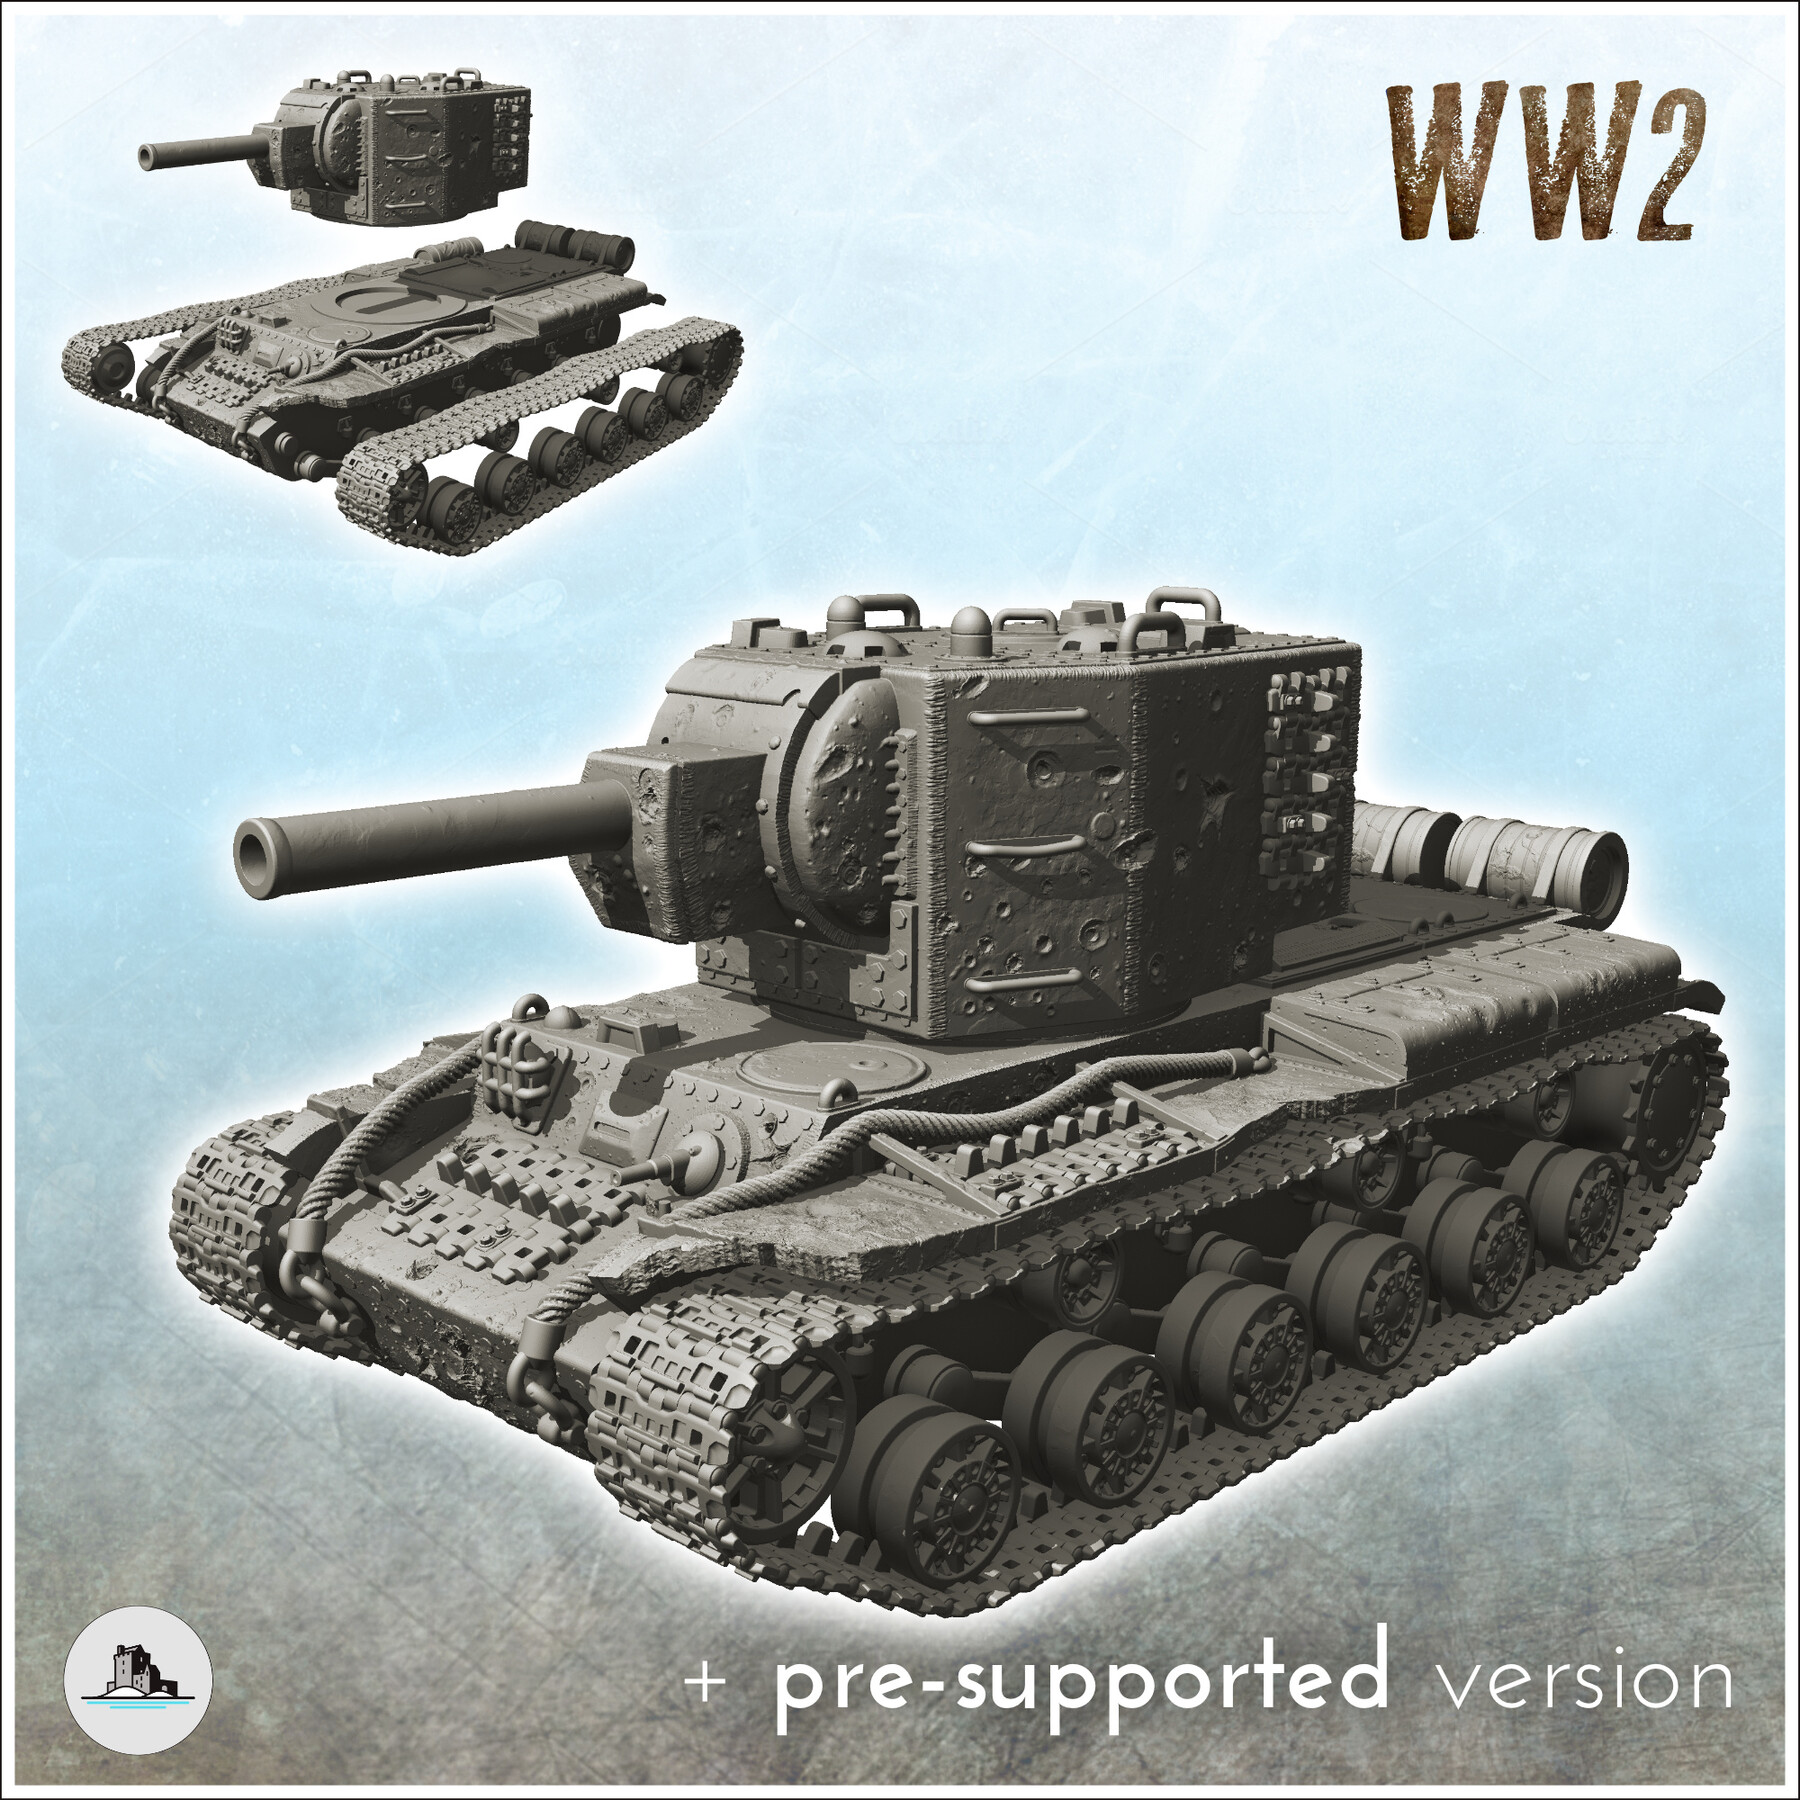 WW2 Tank - KV1 - Advanced Tank Blueprint in Blueprints - UE Marketplace